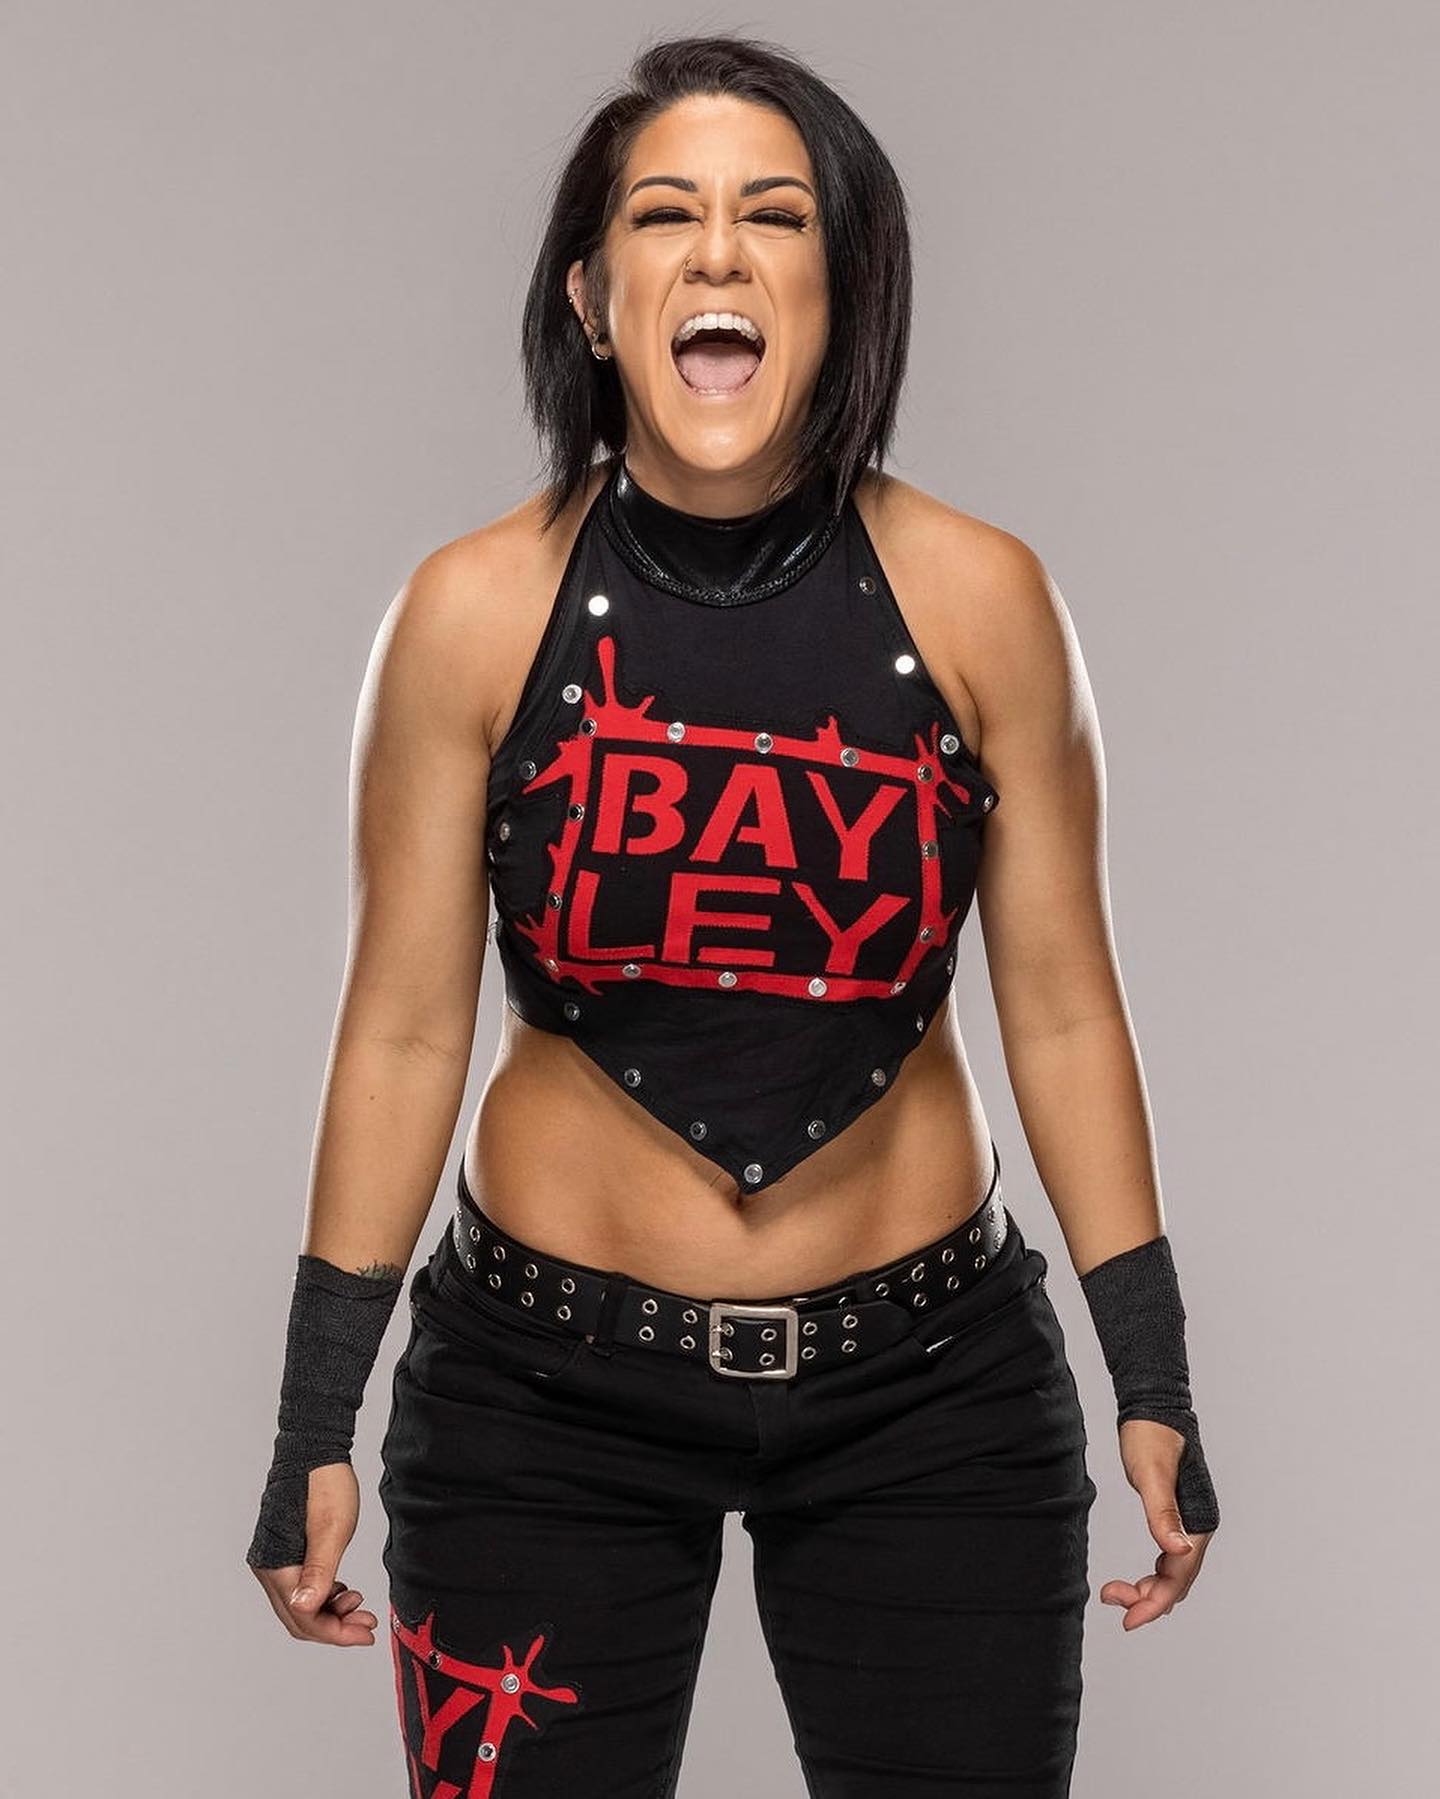 Bayley WWE Star Unseen Photos (14)